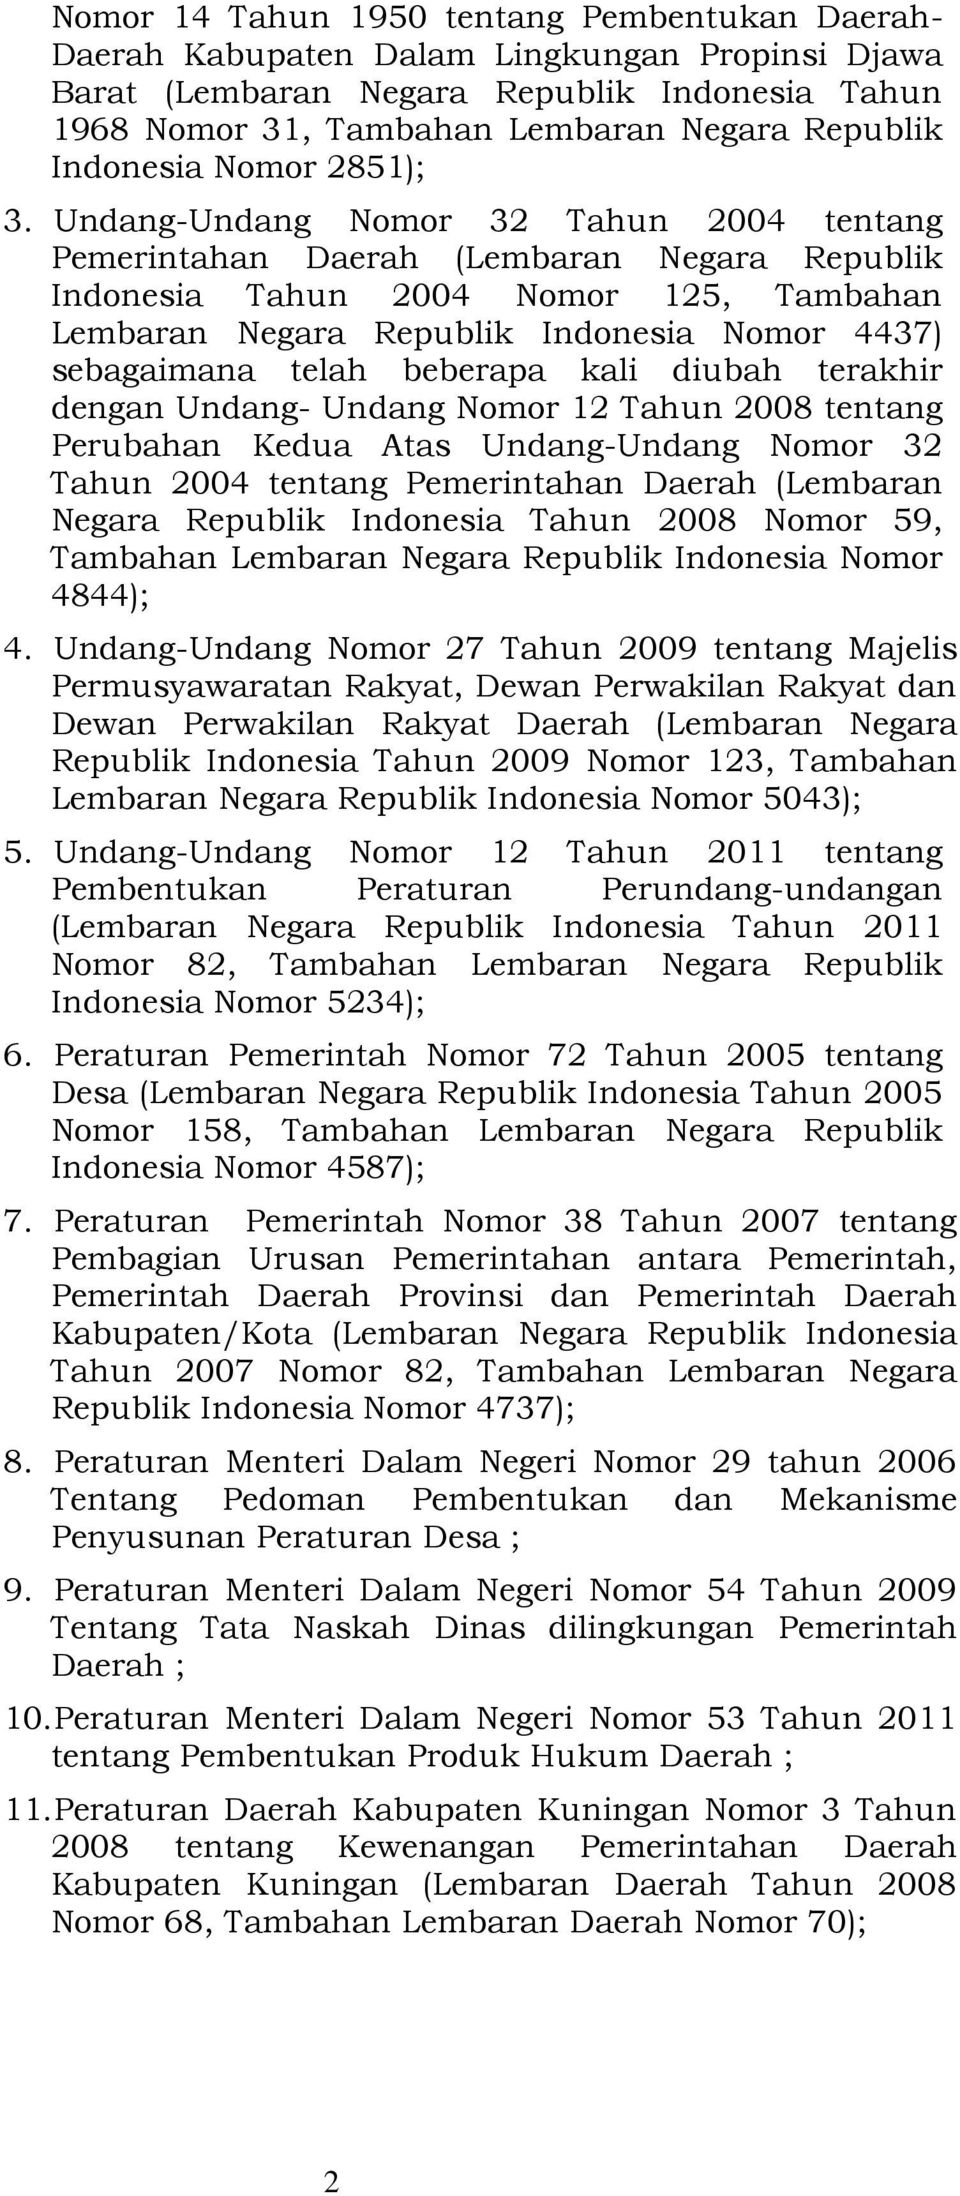 Undang-Undang Nomor 32 Tahun 2004 tentang Pemerintahan Daerah (Lembaran Negara Republik Indonesia Tahun 2004 Nomor 125, Tambahan Lembaran Negara Republik Indonesia Nomor 4437) sebagaimana telah